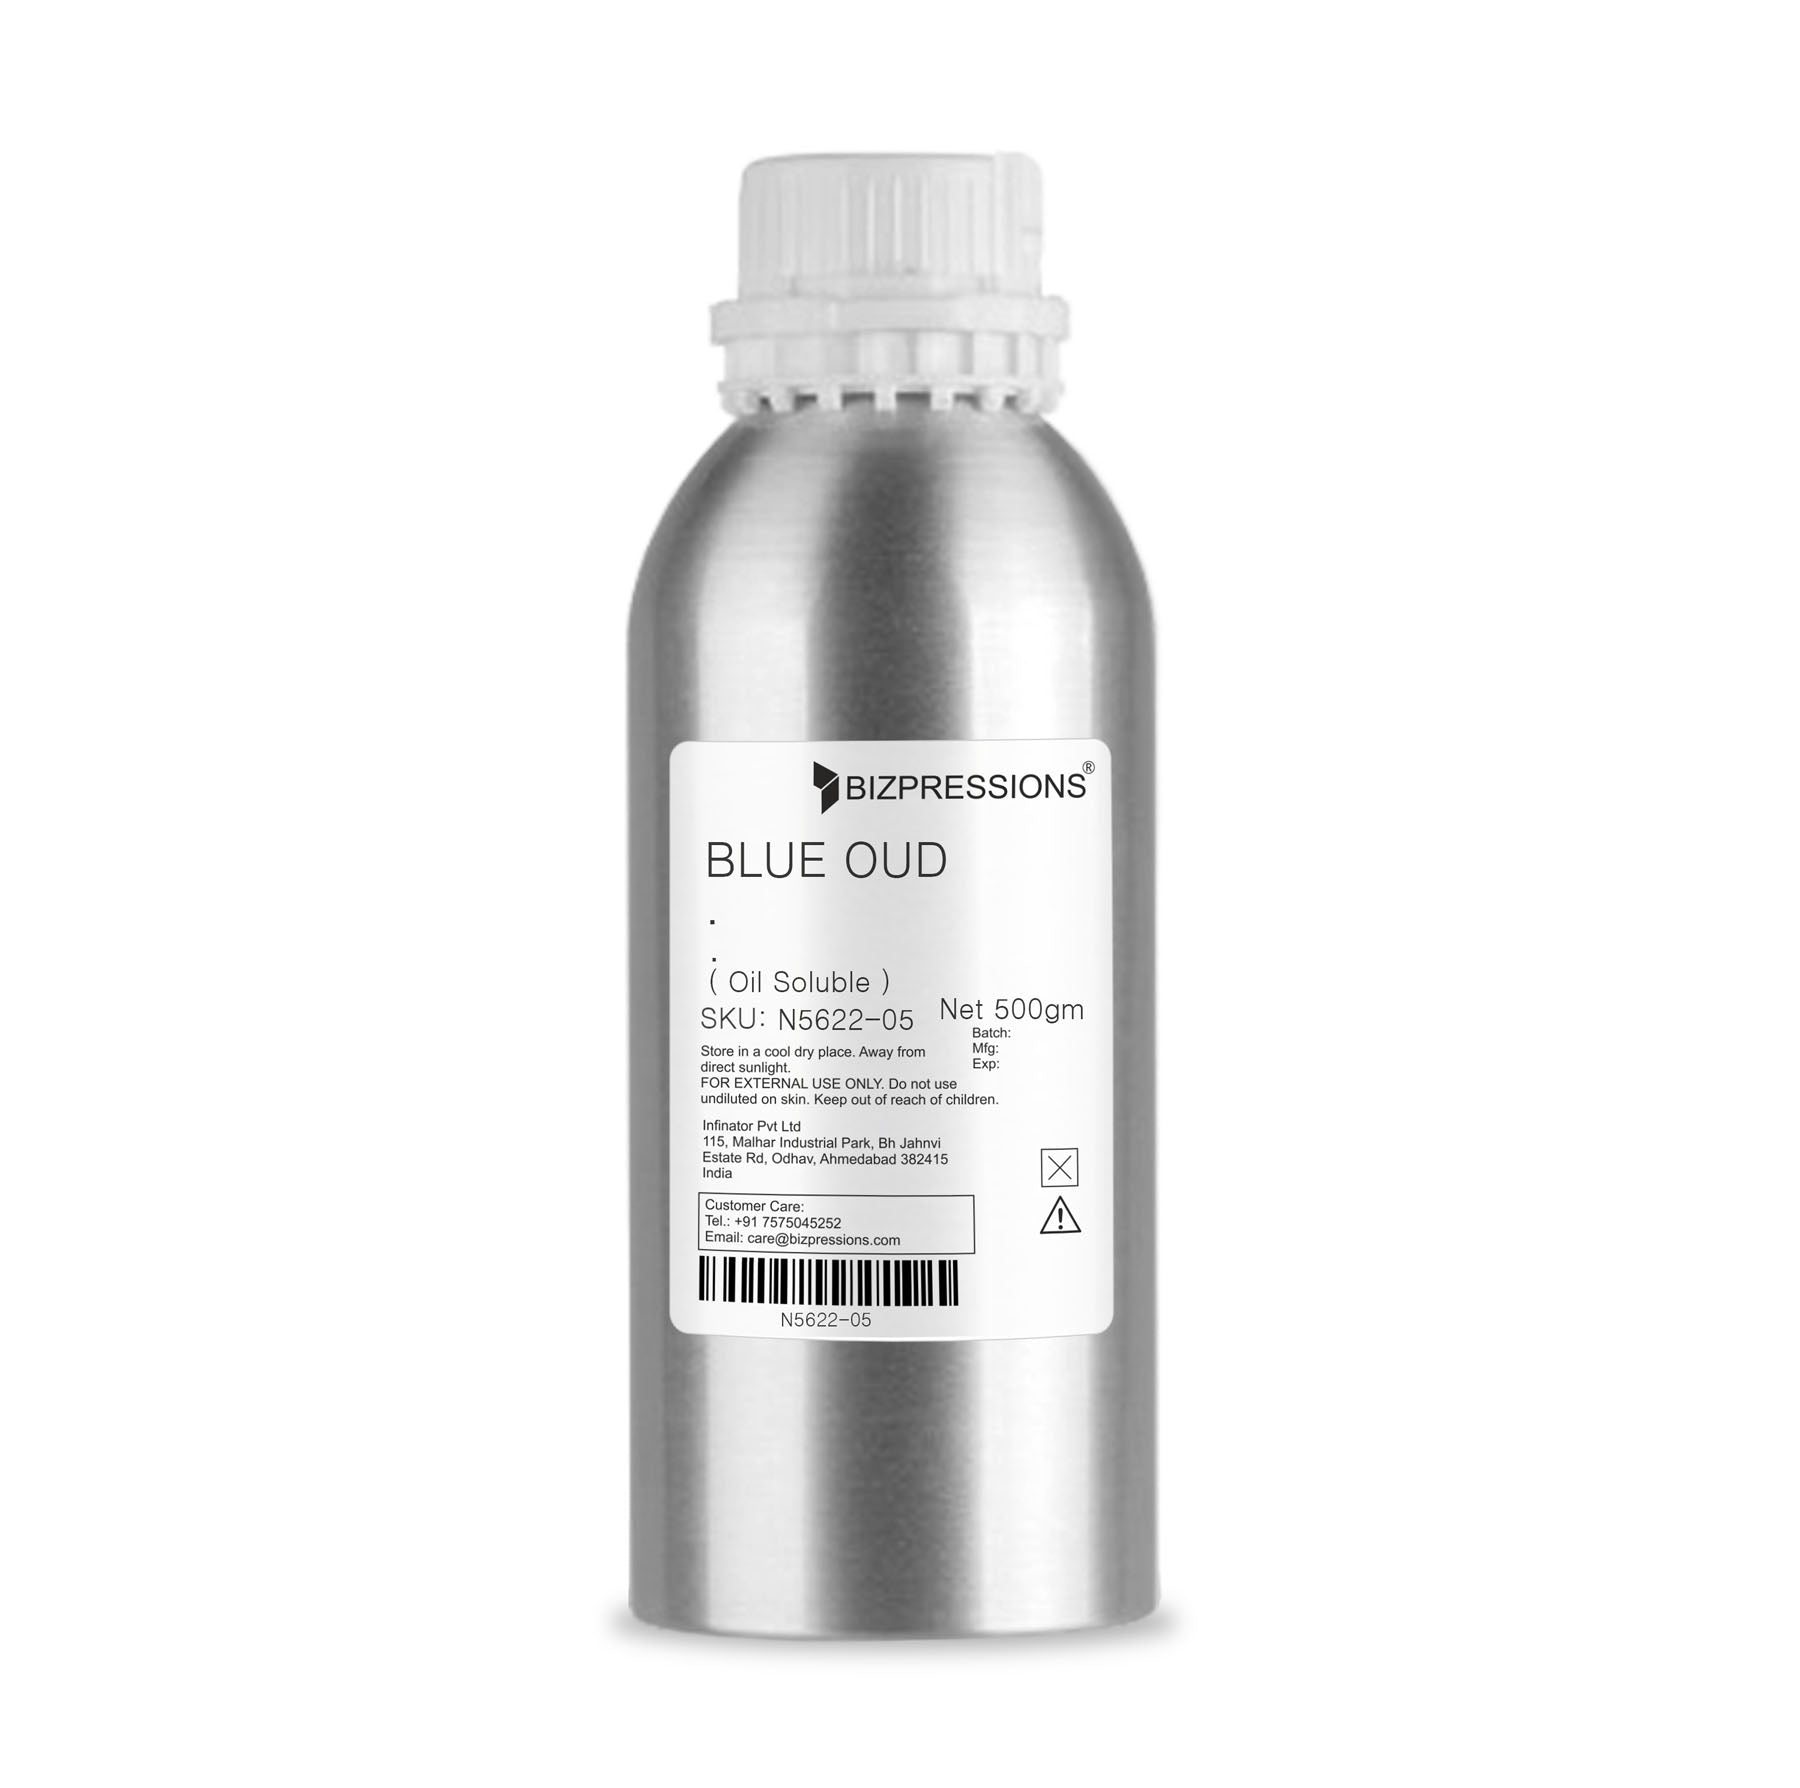 BLUE OUD - Fragrance ( Oil Soluble ) - 500 gm